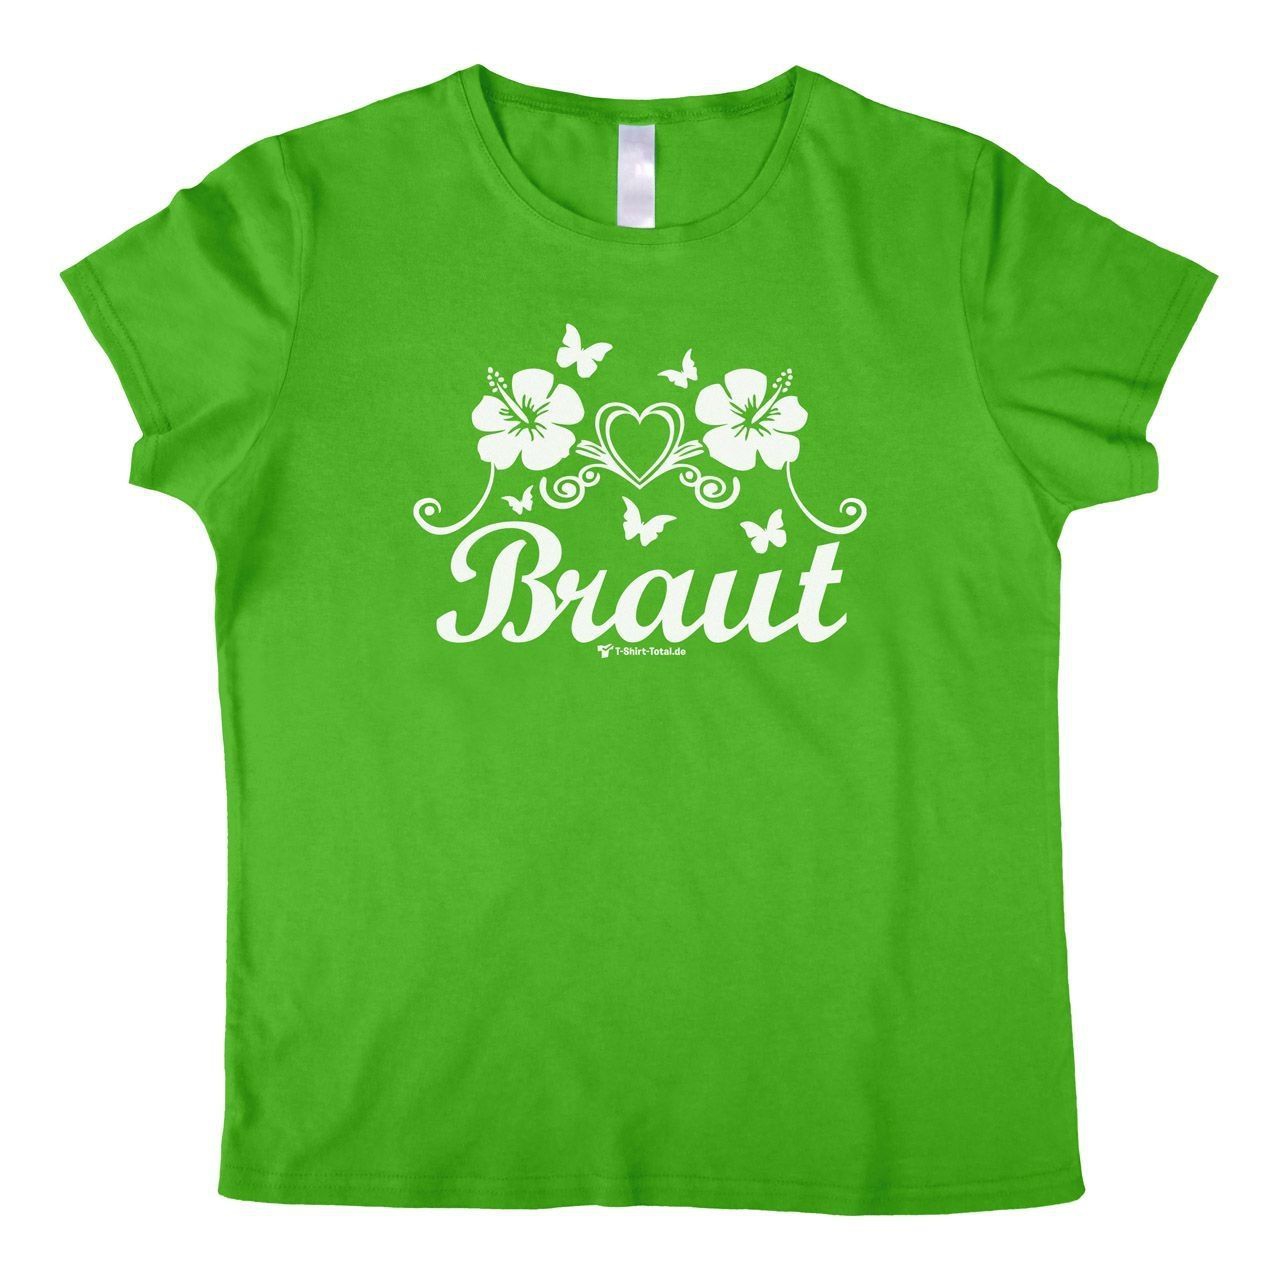 Die Braut Woman T-Shirt grün Extra Large